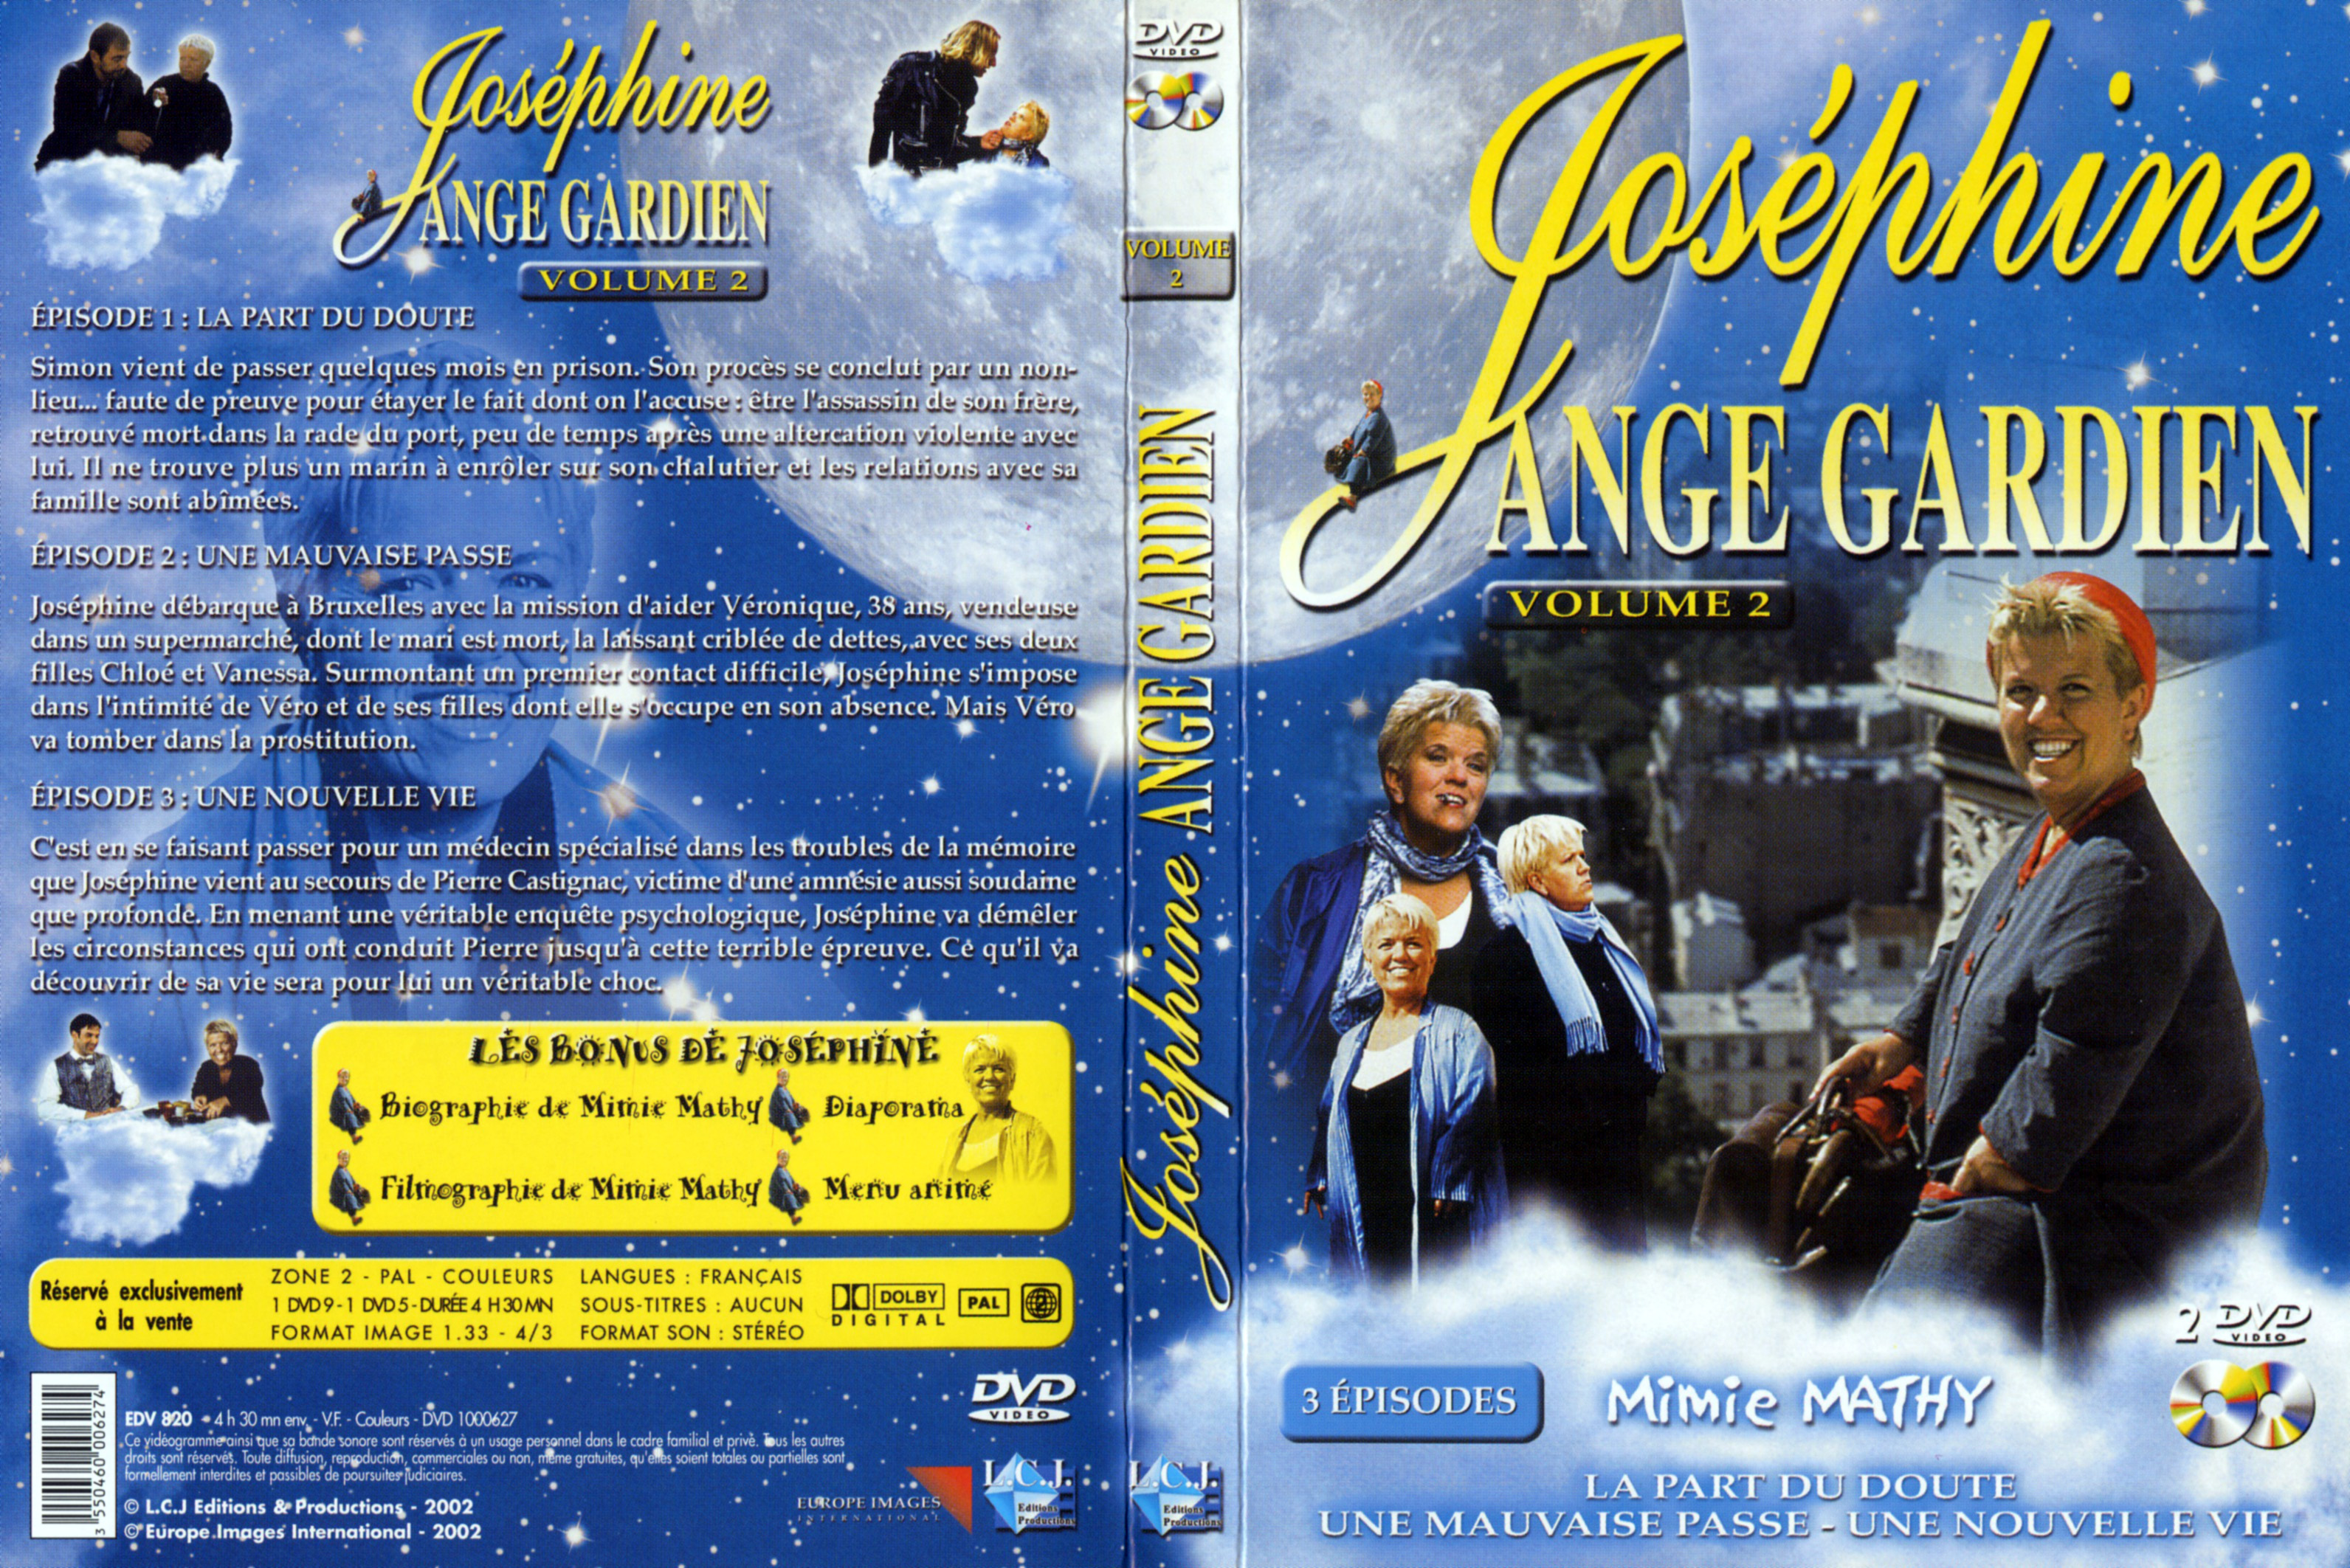 Jaquette DVD Josephine ange gardien vol 02 v2